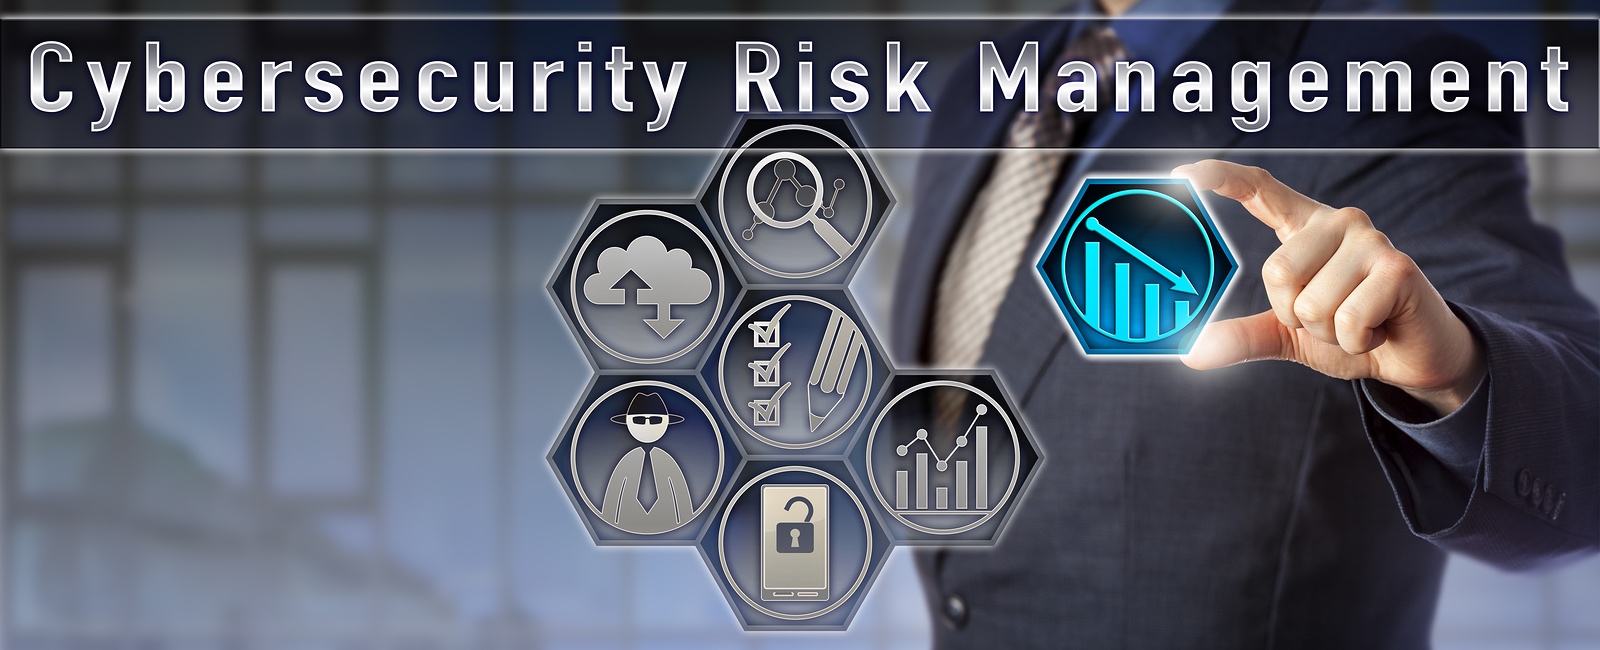 Cybersercurity_risk_management